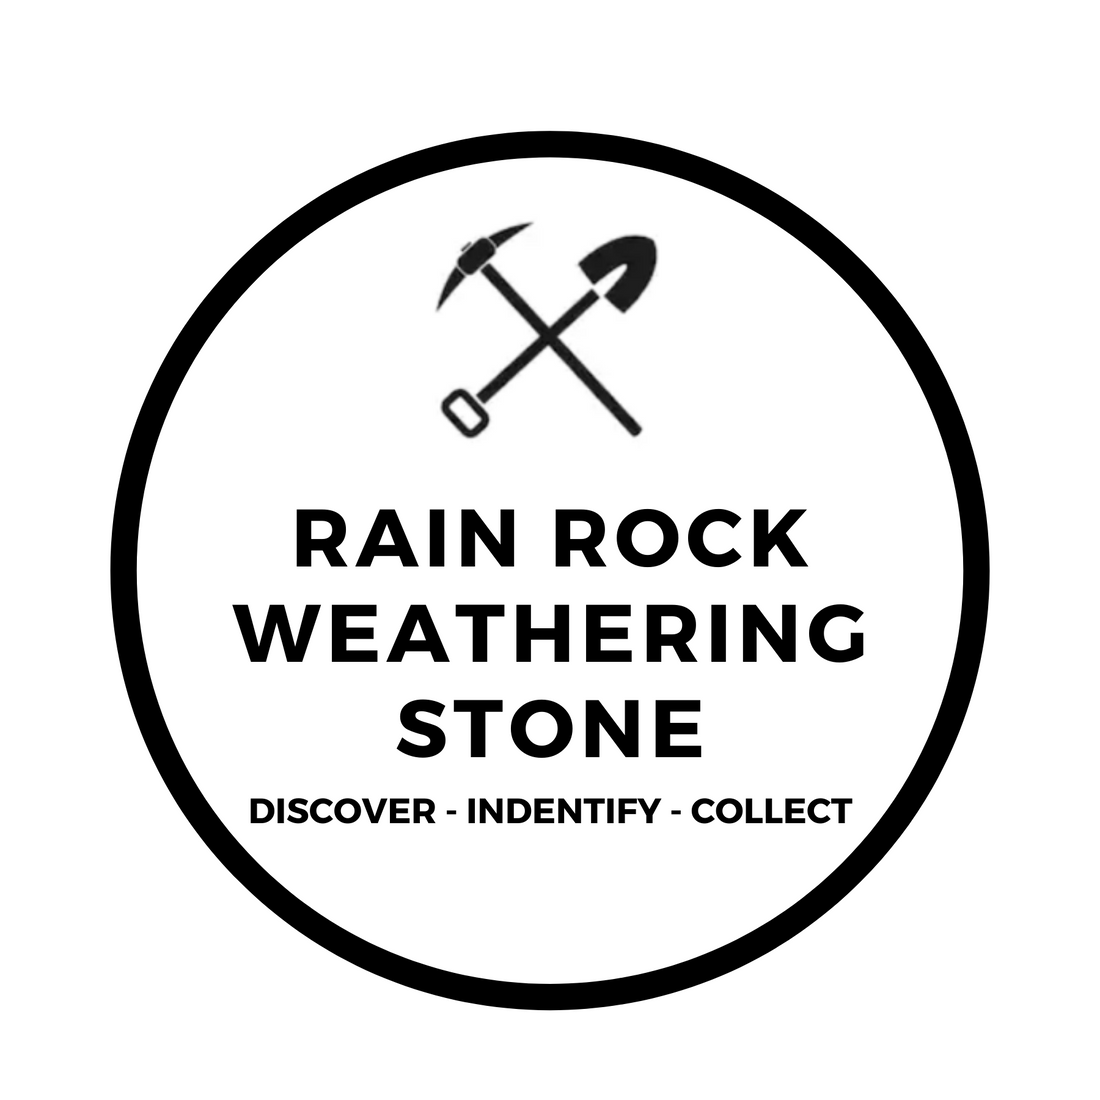 RAIN ROCK WEATHERING STONE